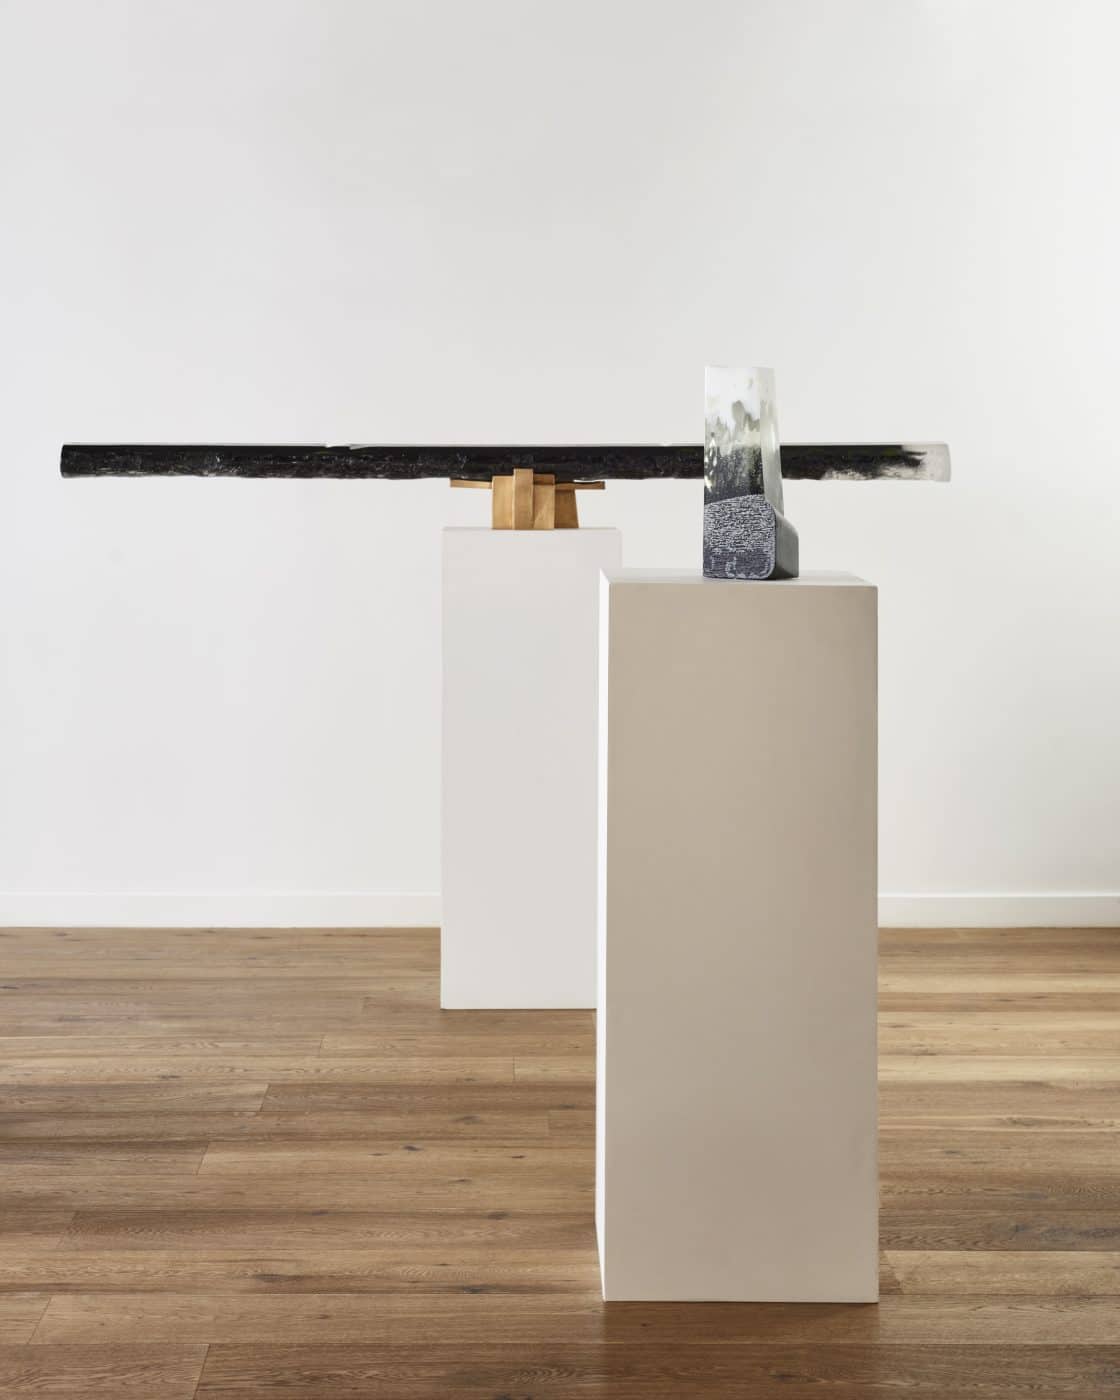 Perrin & Perrin sculptures at Galerie Negropontes